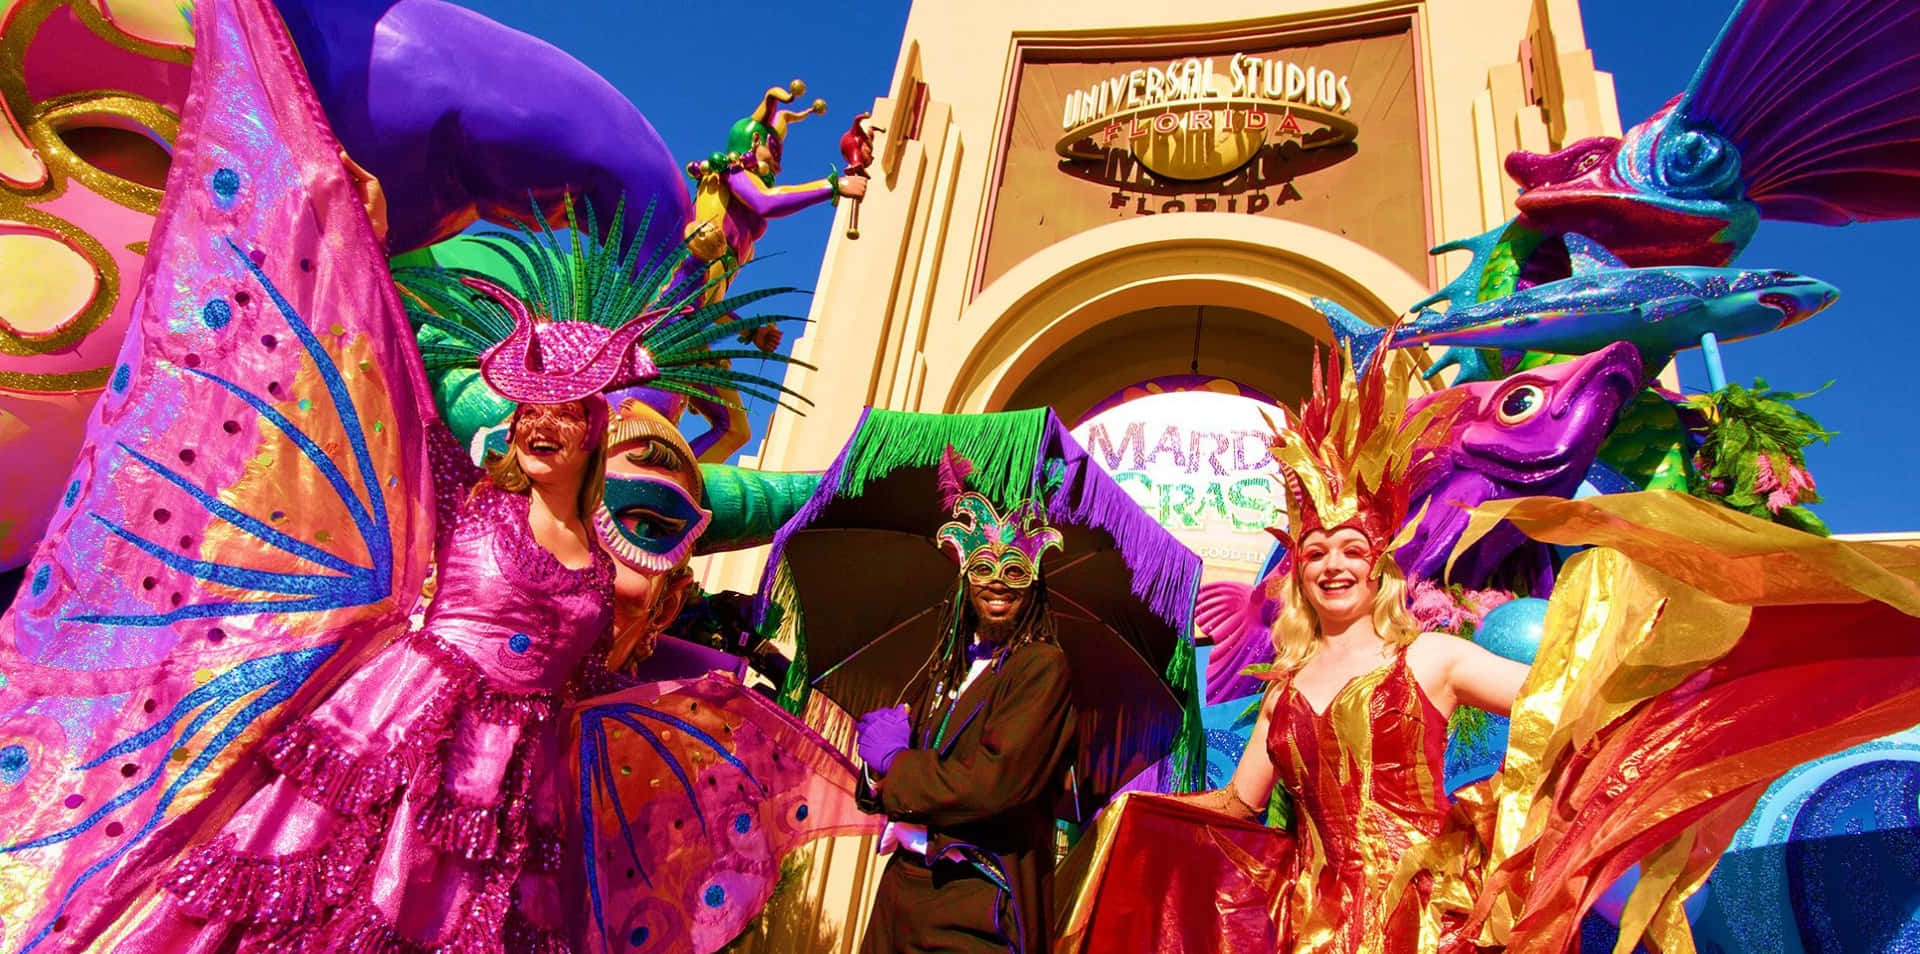 Mardi Gras Universal Studios Orlando Wallpaper